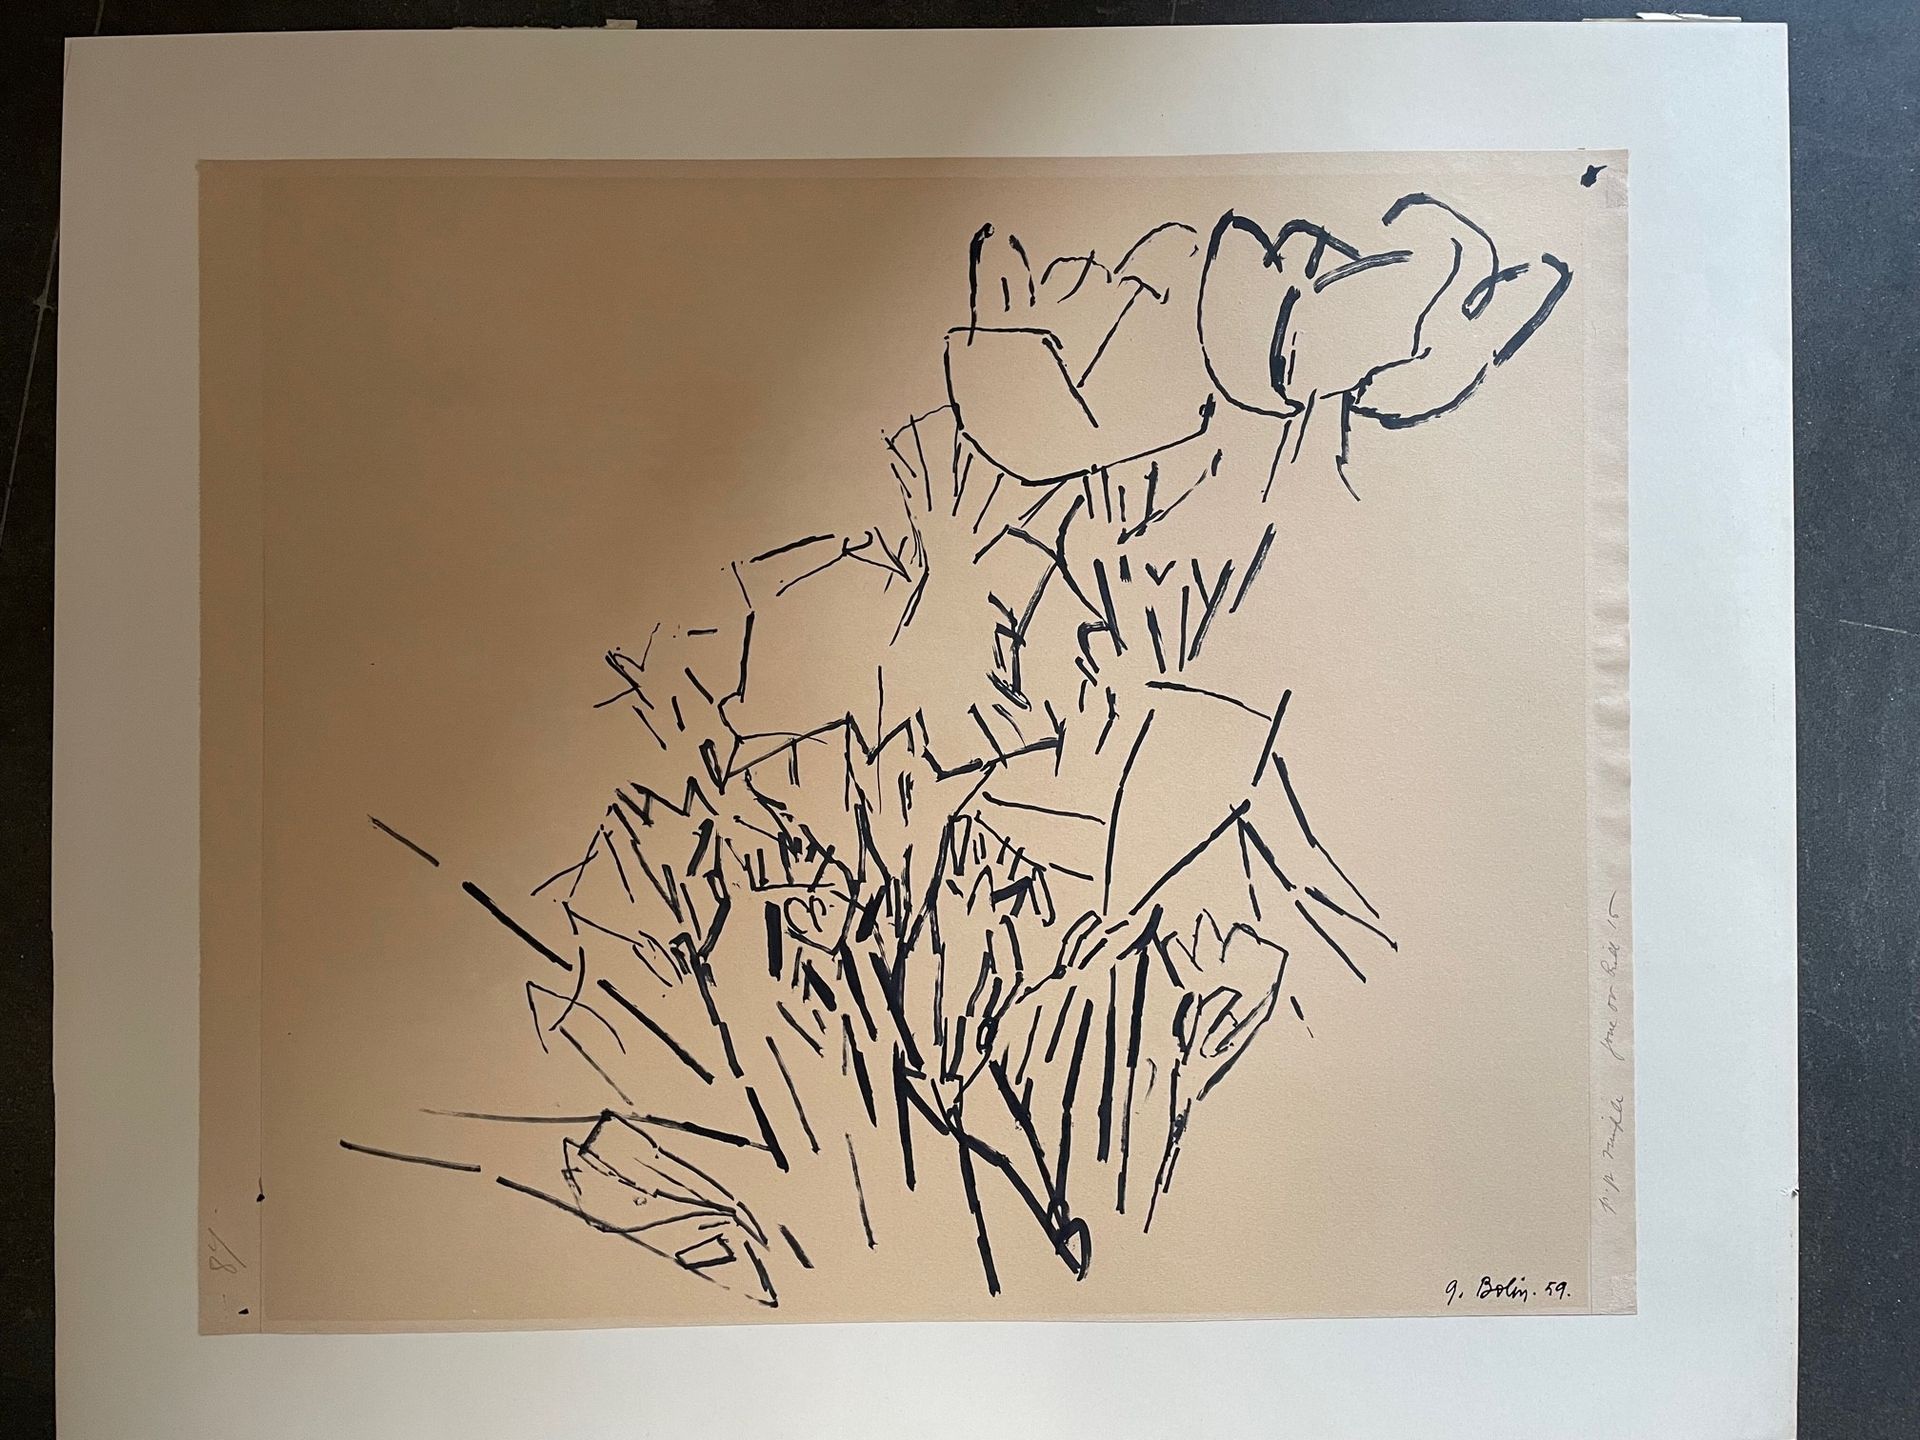 GUSTAV BOLIN (1920-1999) 
抽象构成（1959年）

纸上水墨，右下方有签名和日期59

44 x 54 厘米